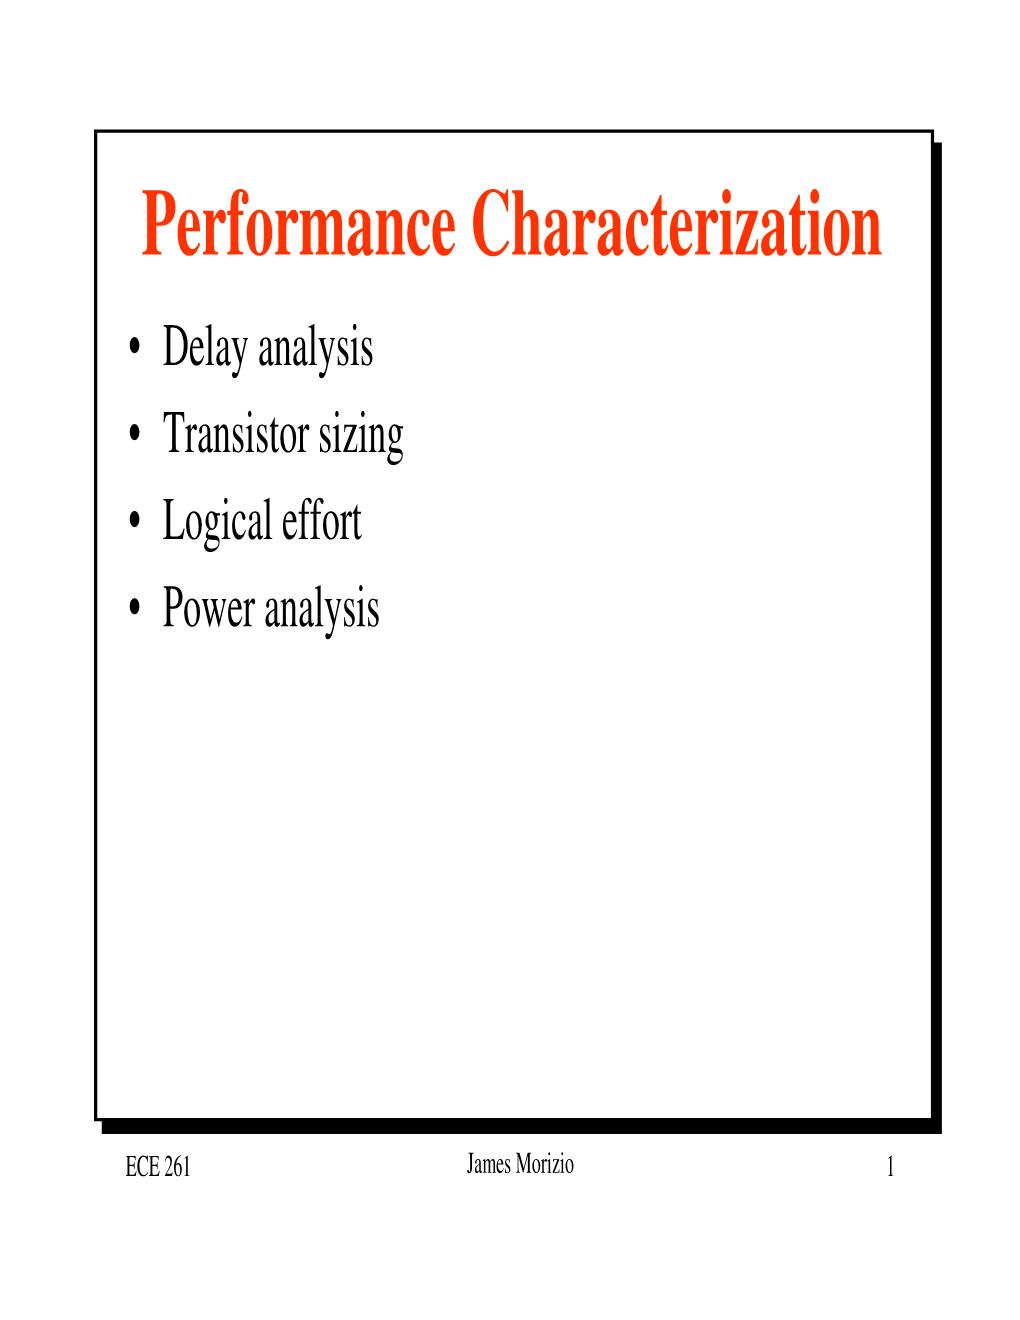 Performance Characterization • Delay Analysis • Transistor Sizing • Logical Effort • Power Analysis